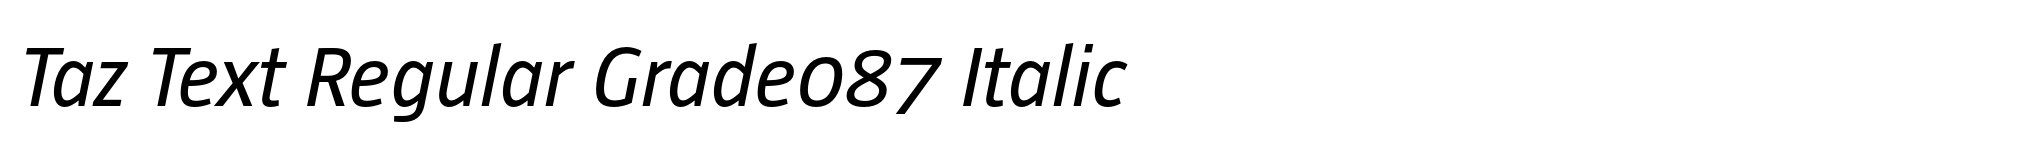 Taz Text Regular Grade087 Italic image